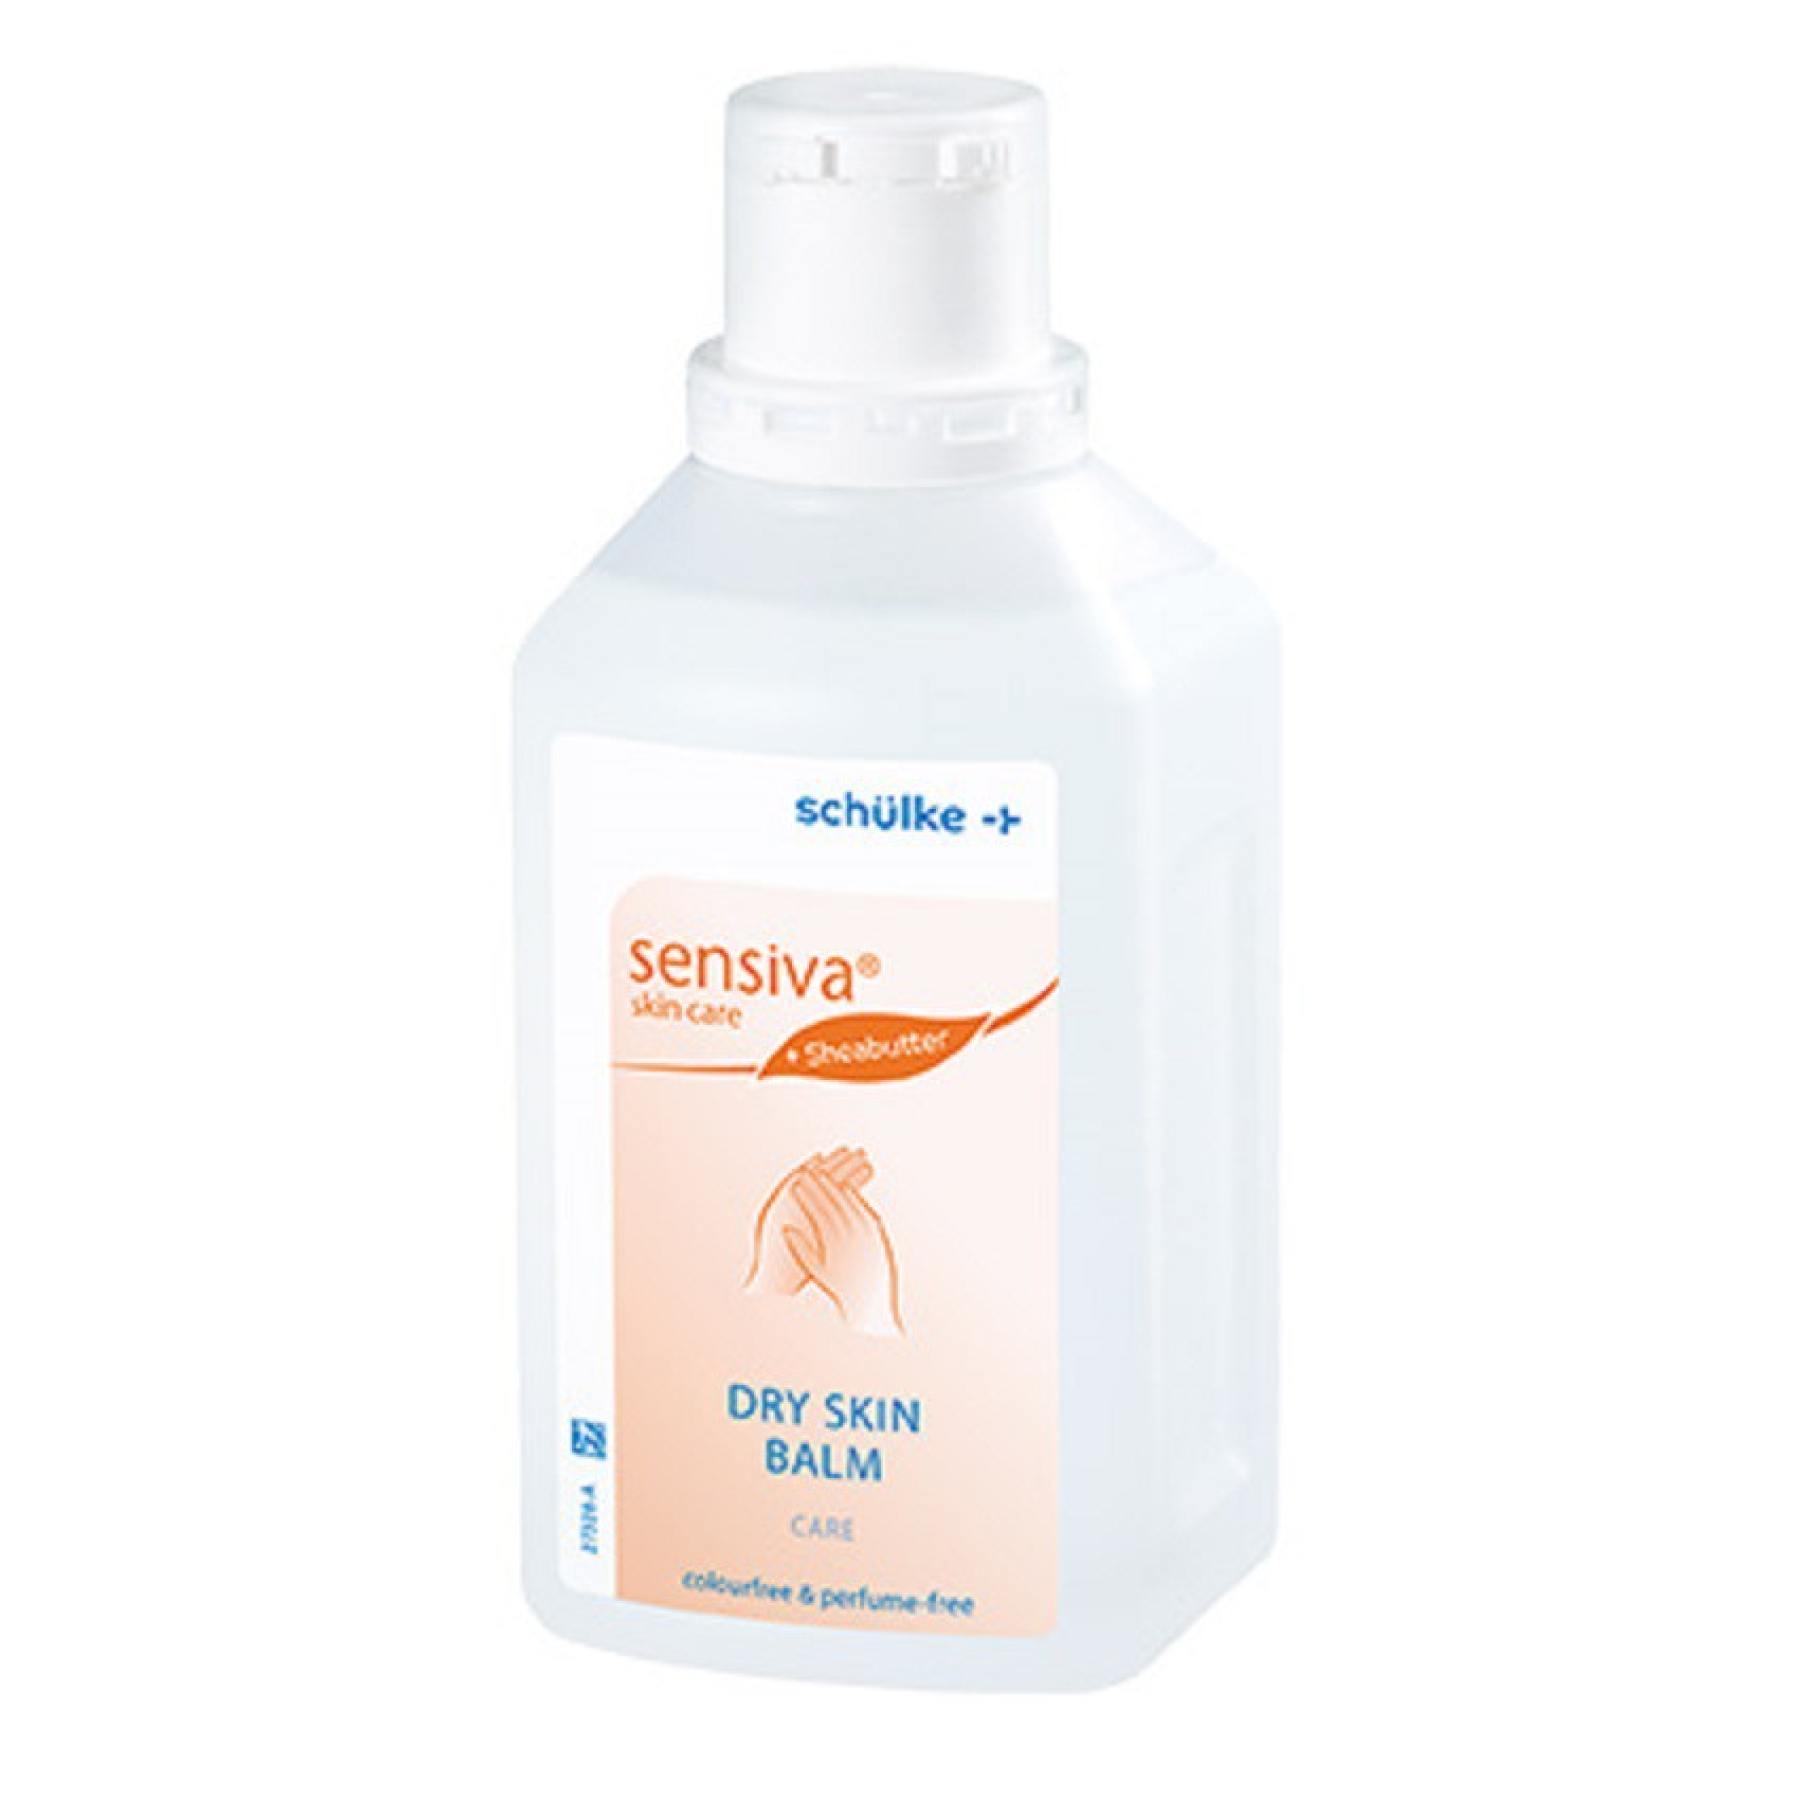 sensiva dry skin balm 500ml